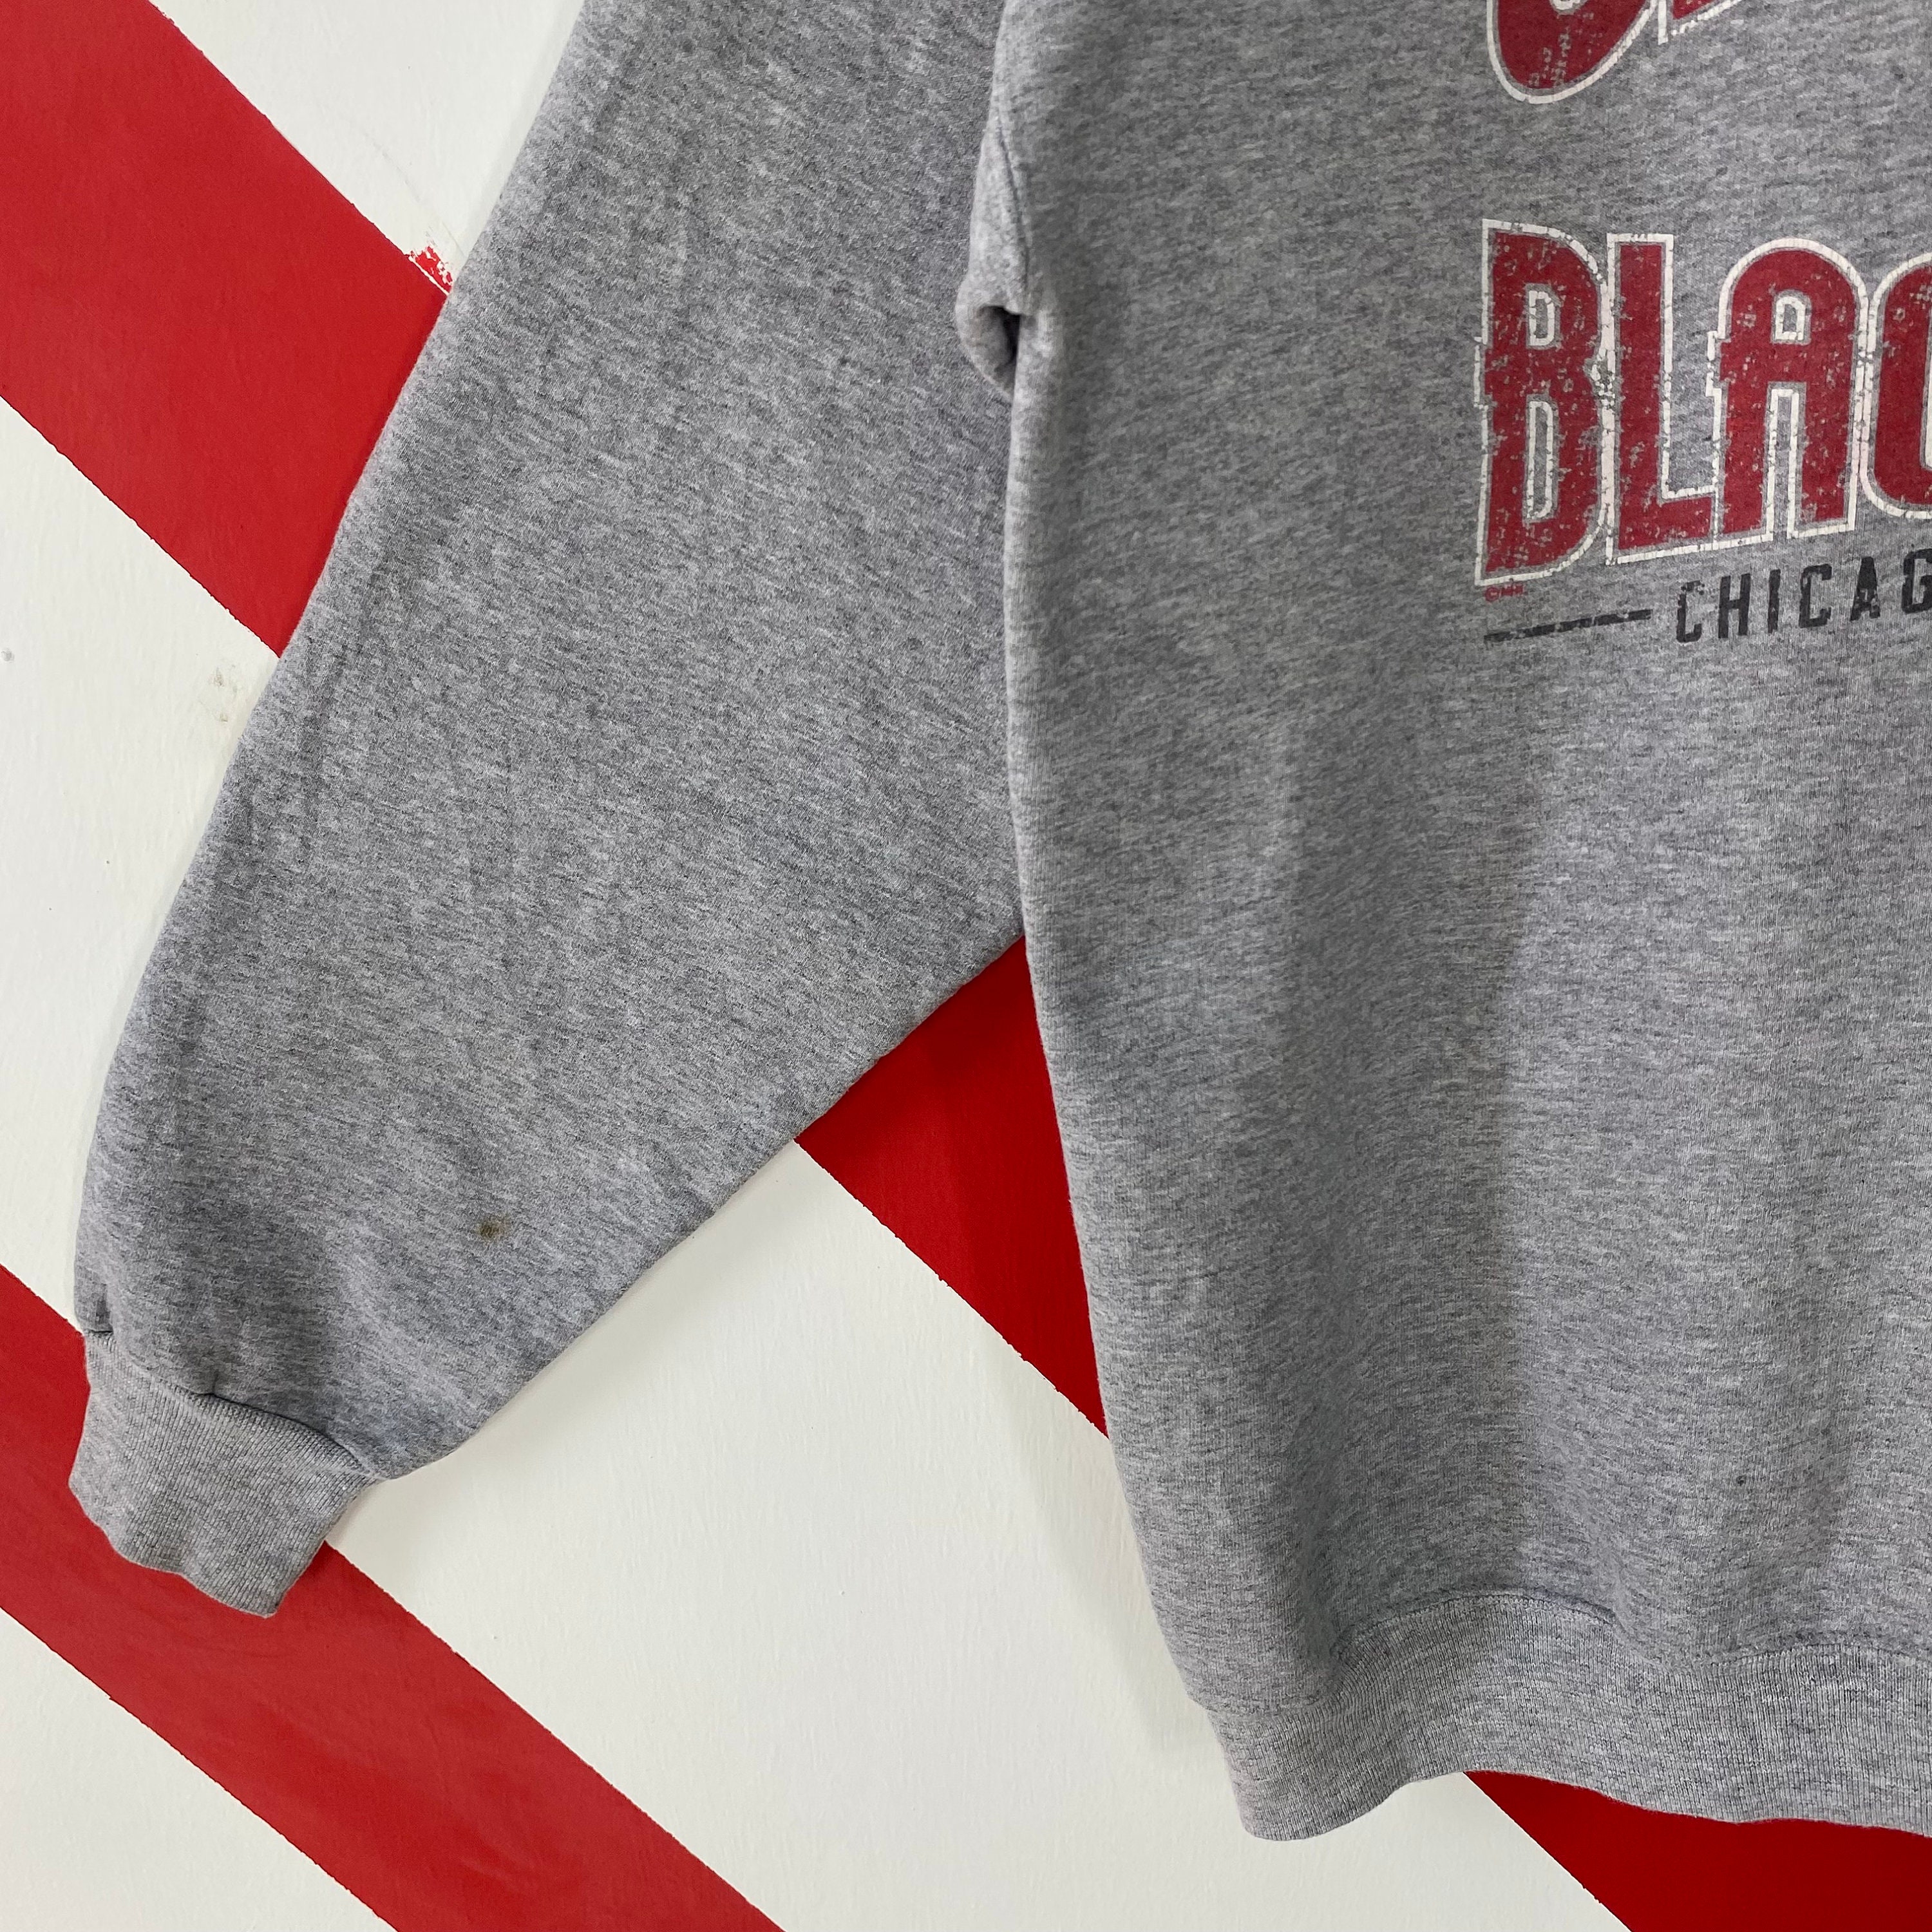 Vintage 00s Cotton Mix Red Chicago Blackhawks Sweatshirt - Small